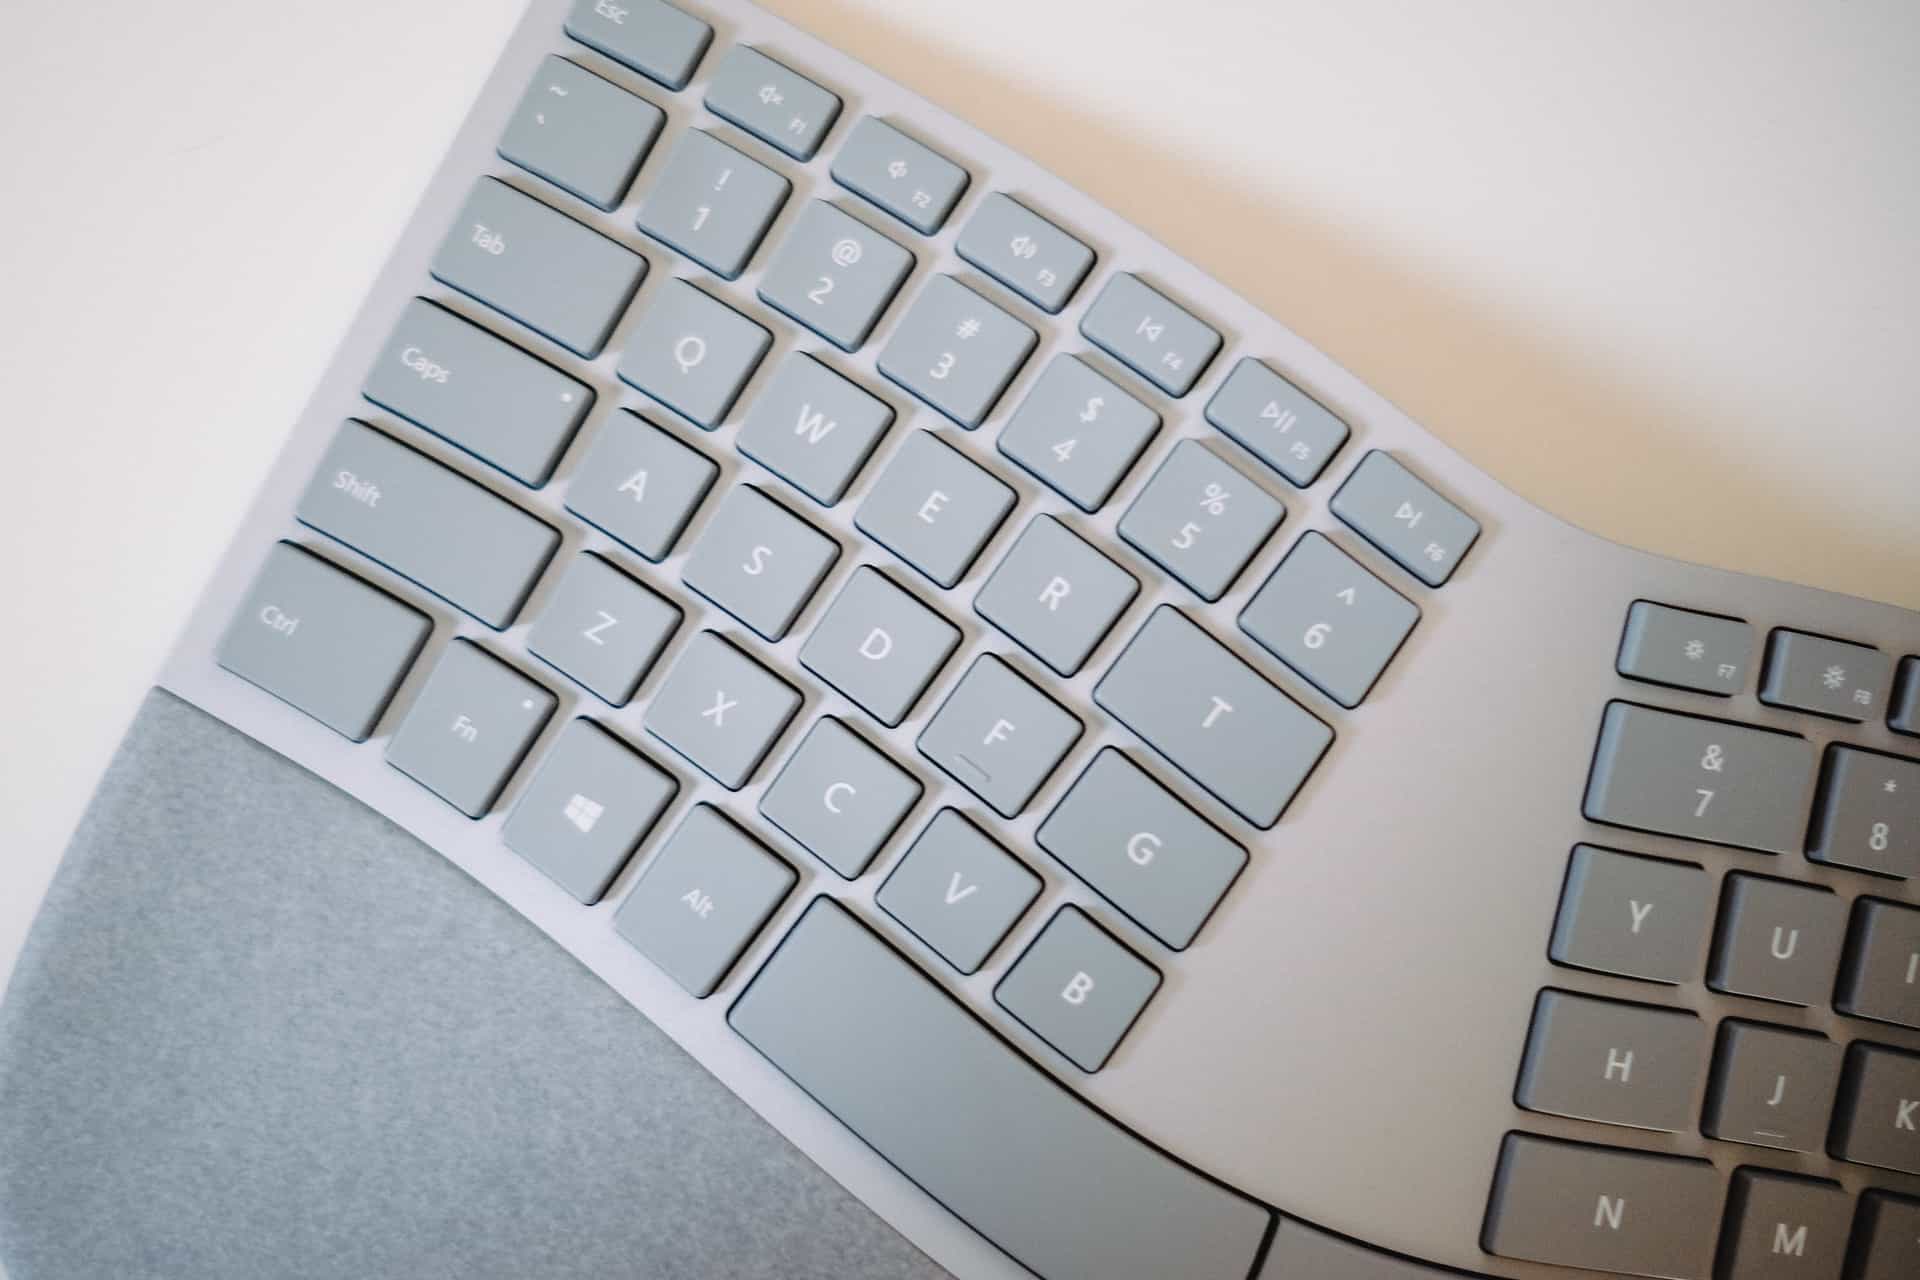 ergonomic keyboard compatible with apple mac computers